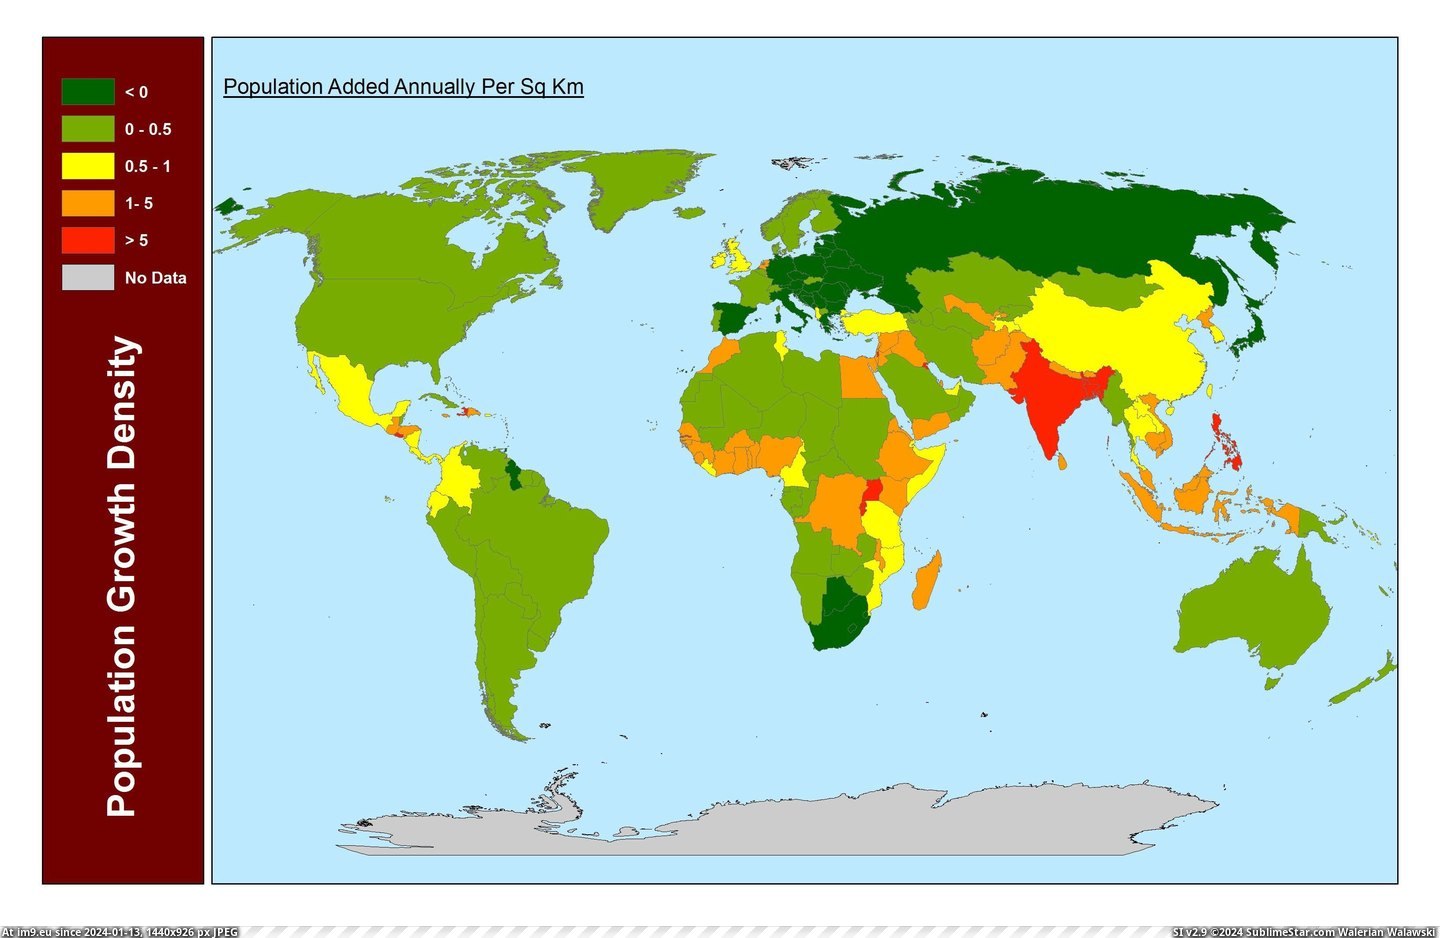 #World #Density #Growth #Population [Mapporn] World Population Growth Density [3264x2112] [OC] Pic. (Bild von album My r/MAPS favs))